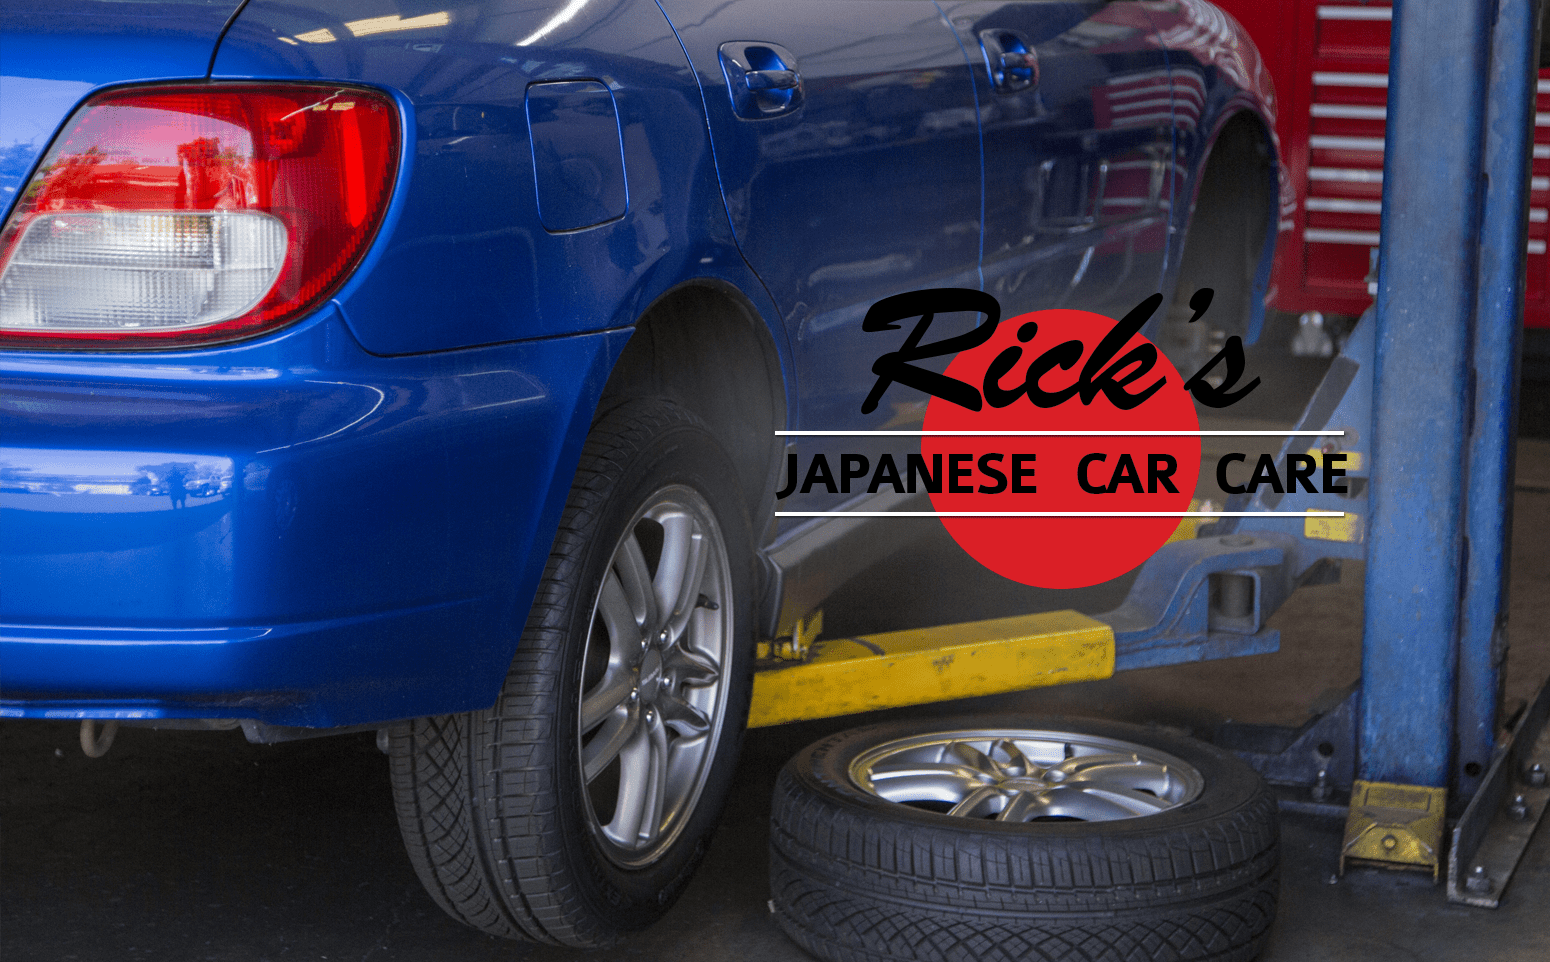 Rick's Japanese Car Care - Thousand Oaks, CA, US, mechanic shop near me